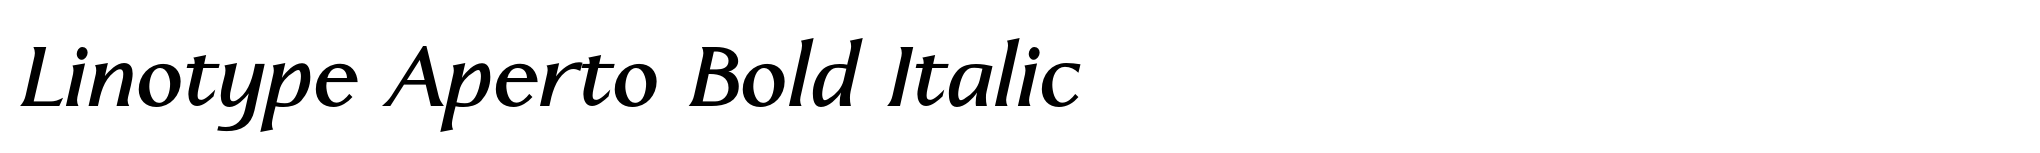 Linotype Aperto Bold Italic image